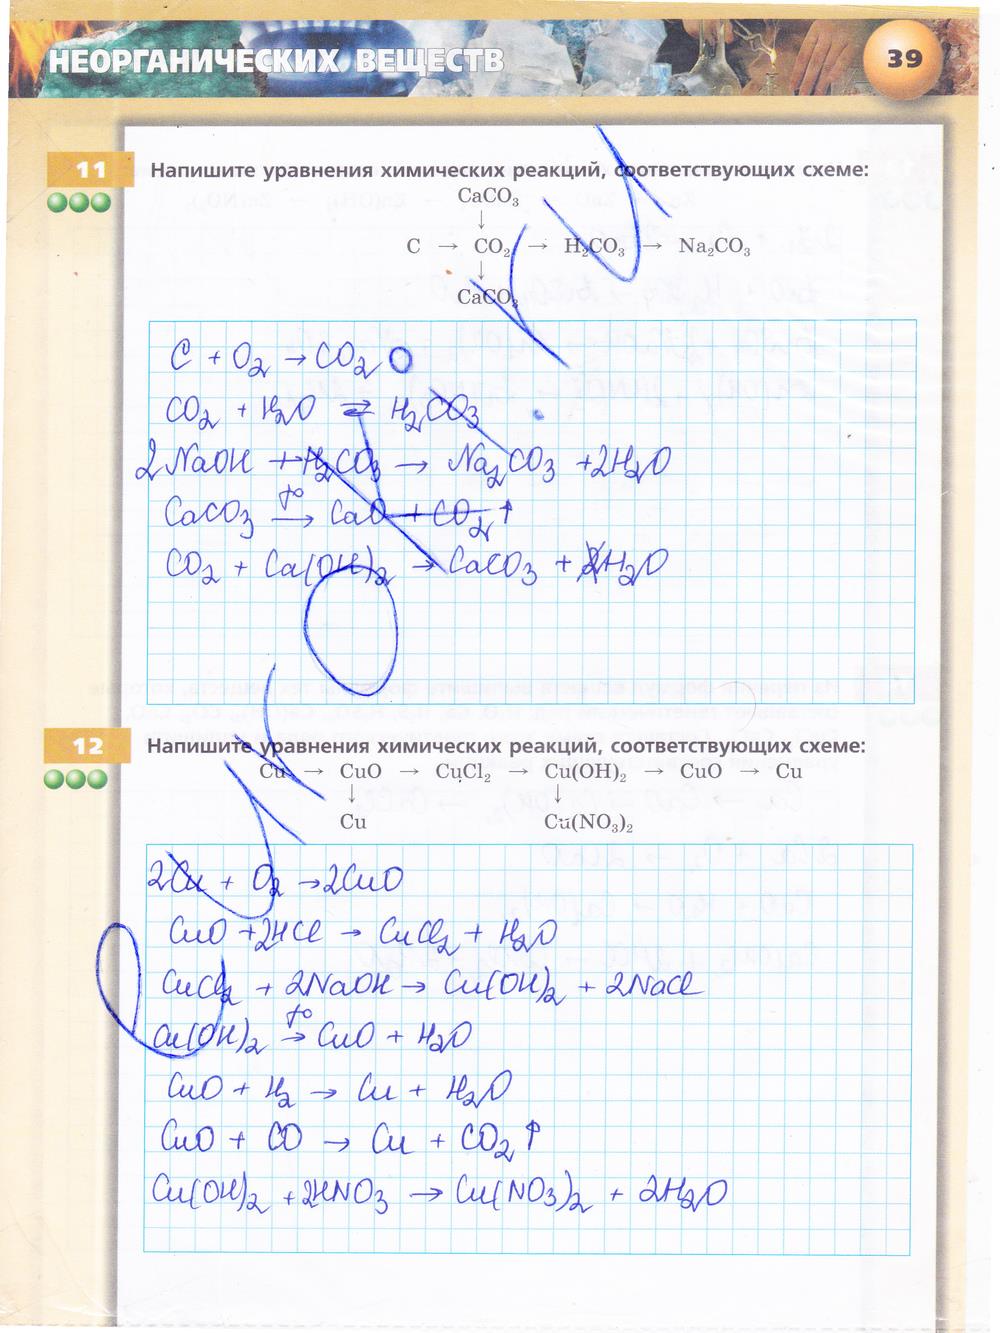 гдз 8 класс тетрадь-тренажёр страница 39 химия Гара